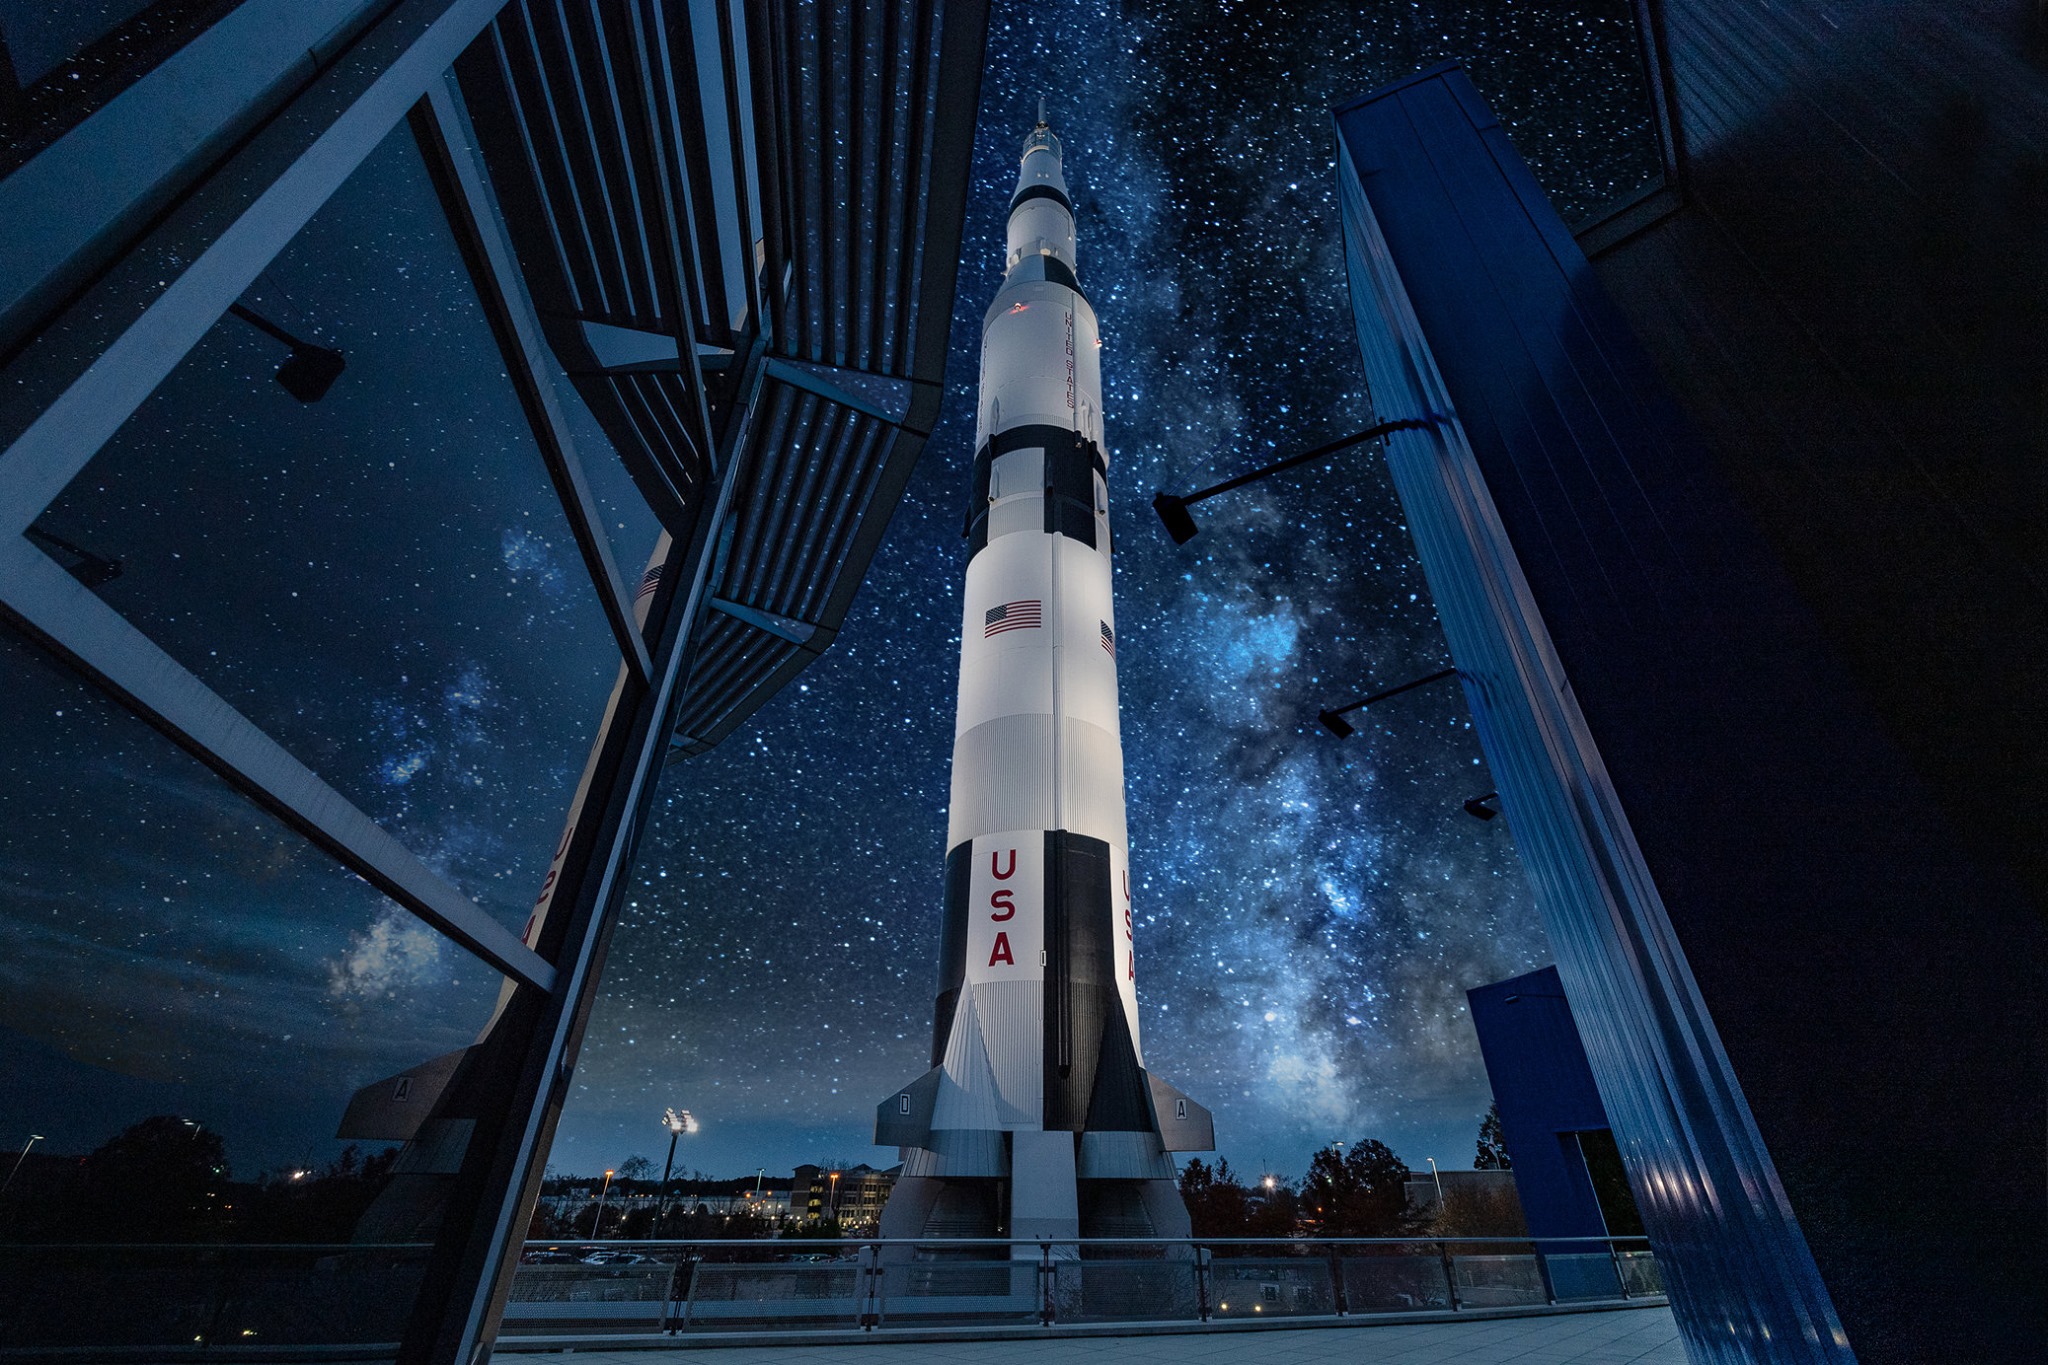 Space and Rocket Center 2 Mission accomplished. U.S. Space and Rocket Center raises $1.5 million in 8 days